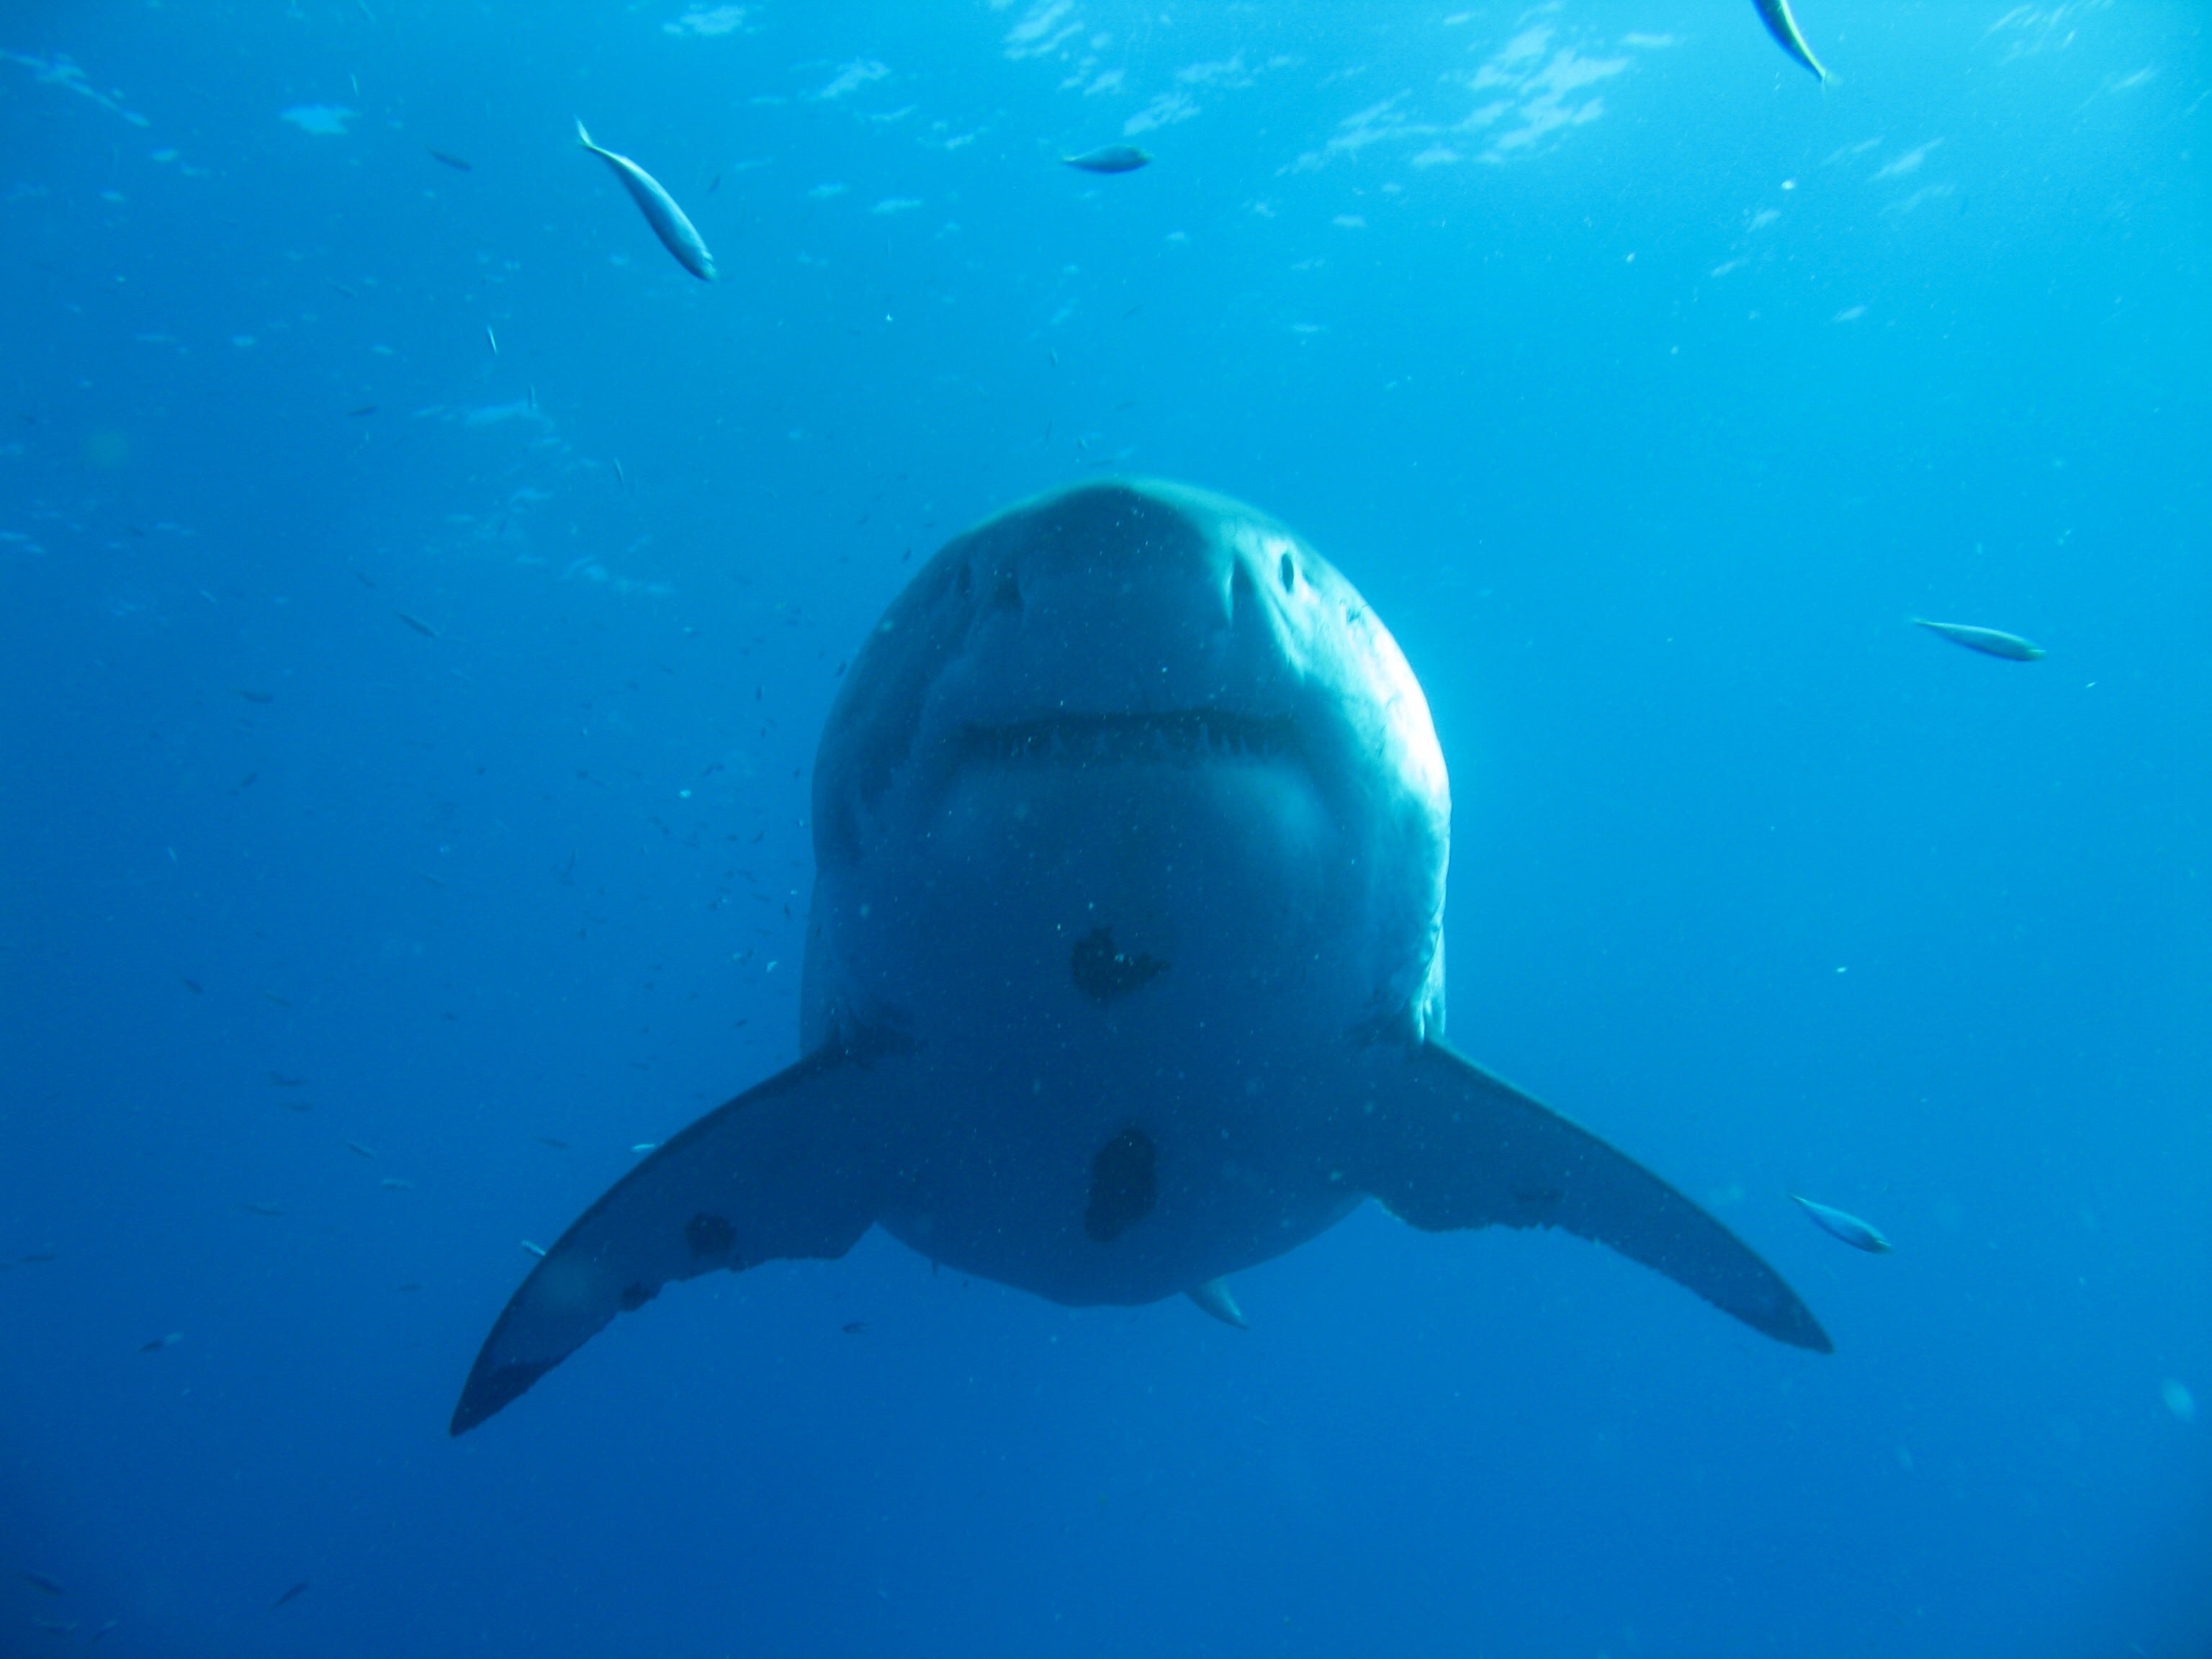 Diver Films "World's Biggest" Great White Shark